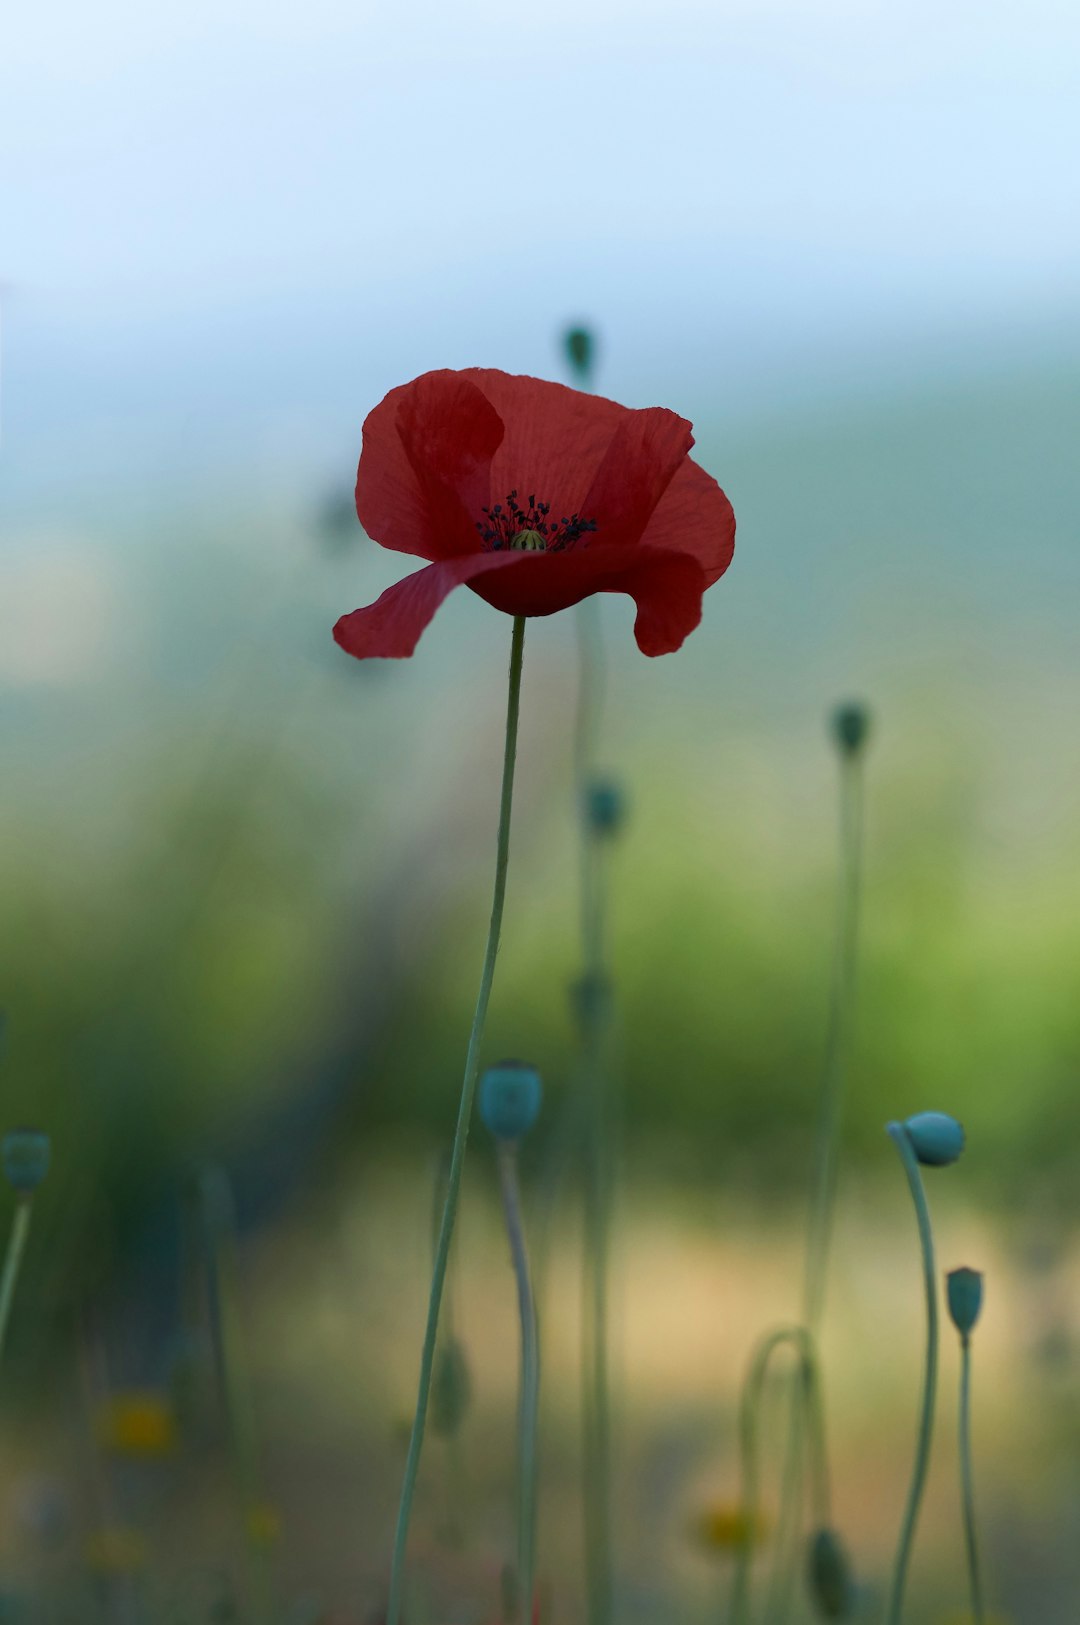 red flower in tilt shift lens photo – Free Wallpapers Image on Unsplash